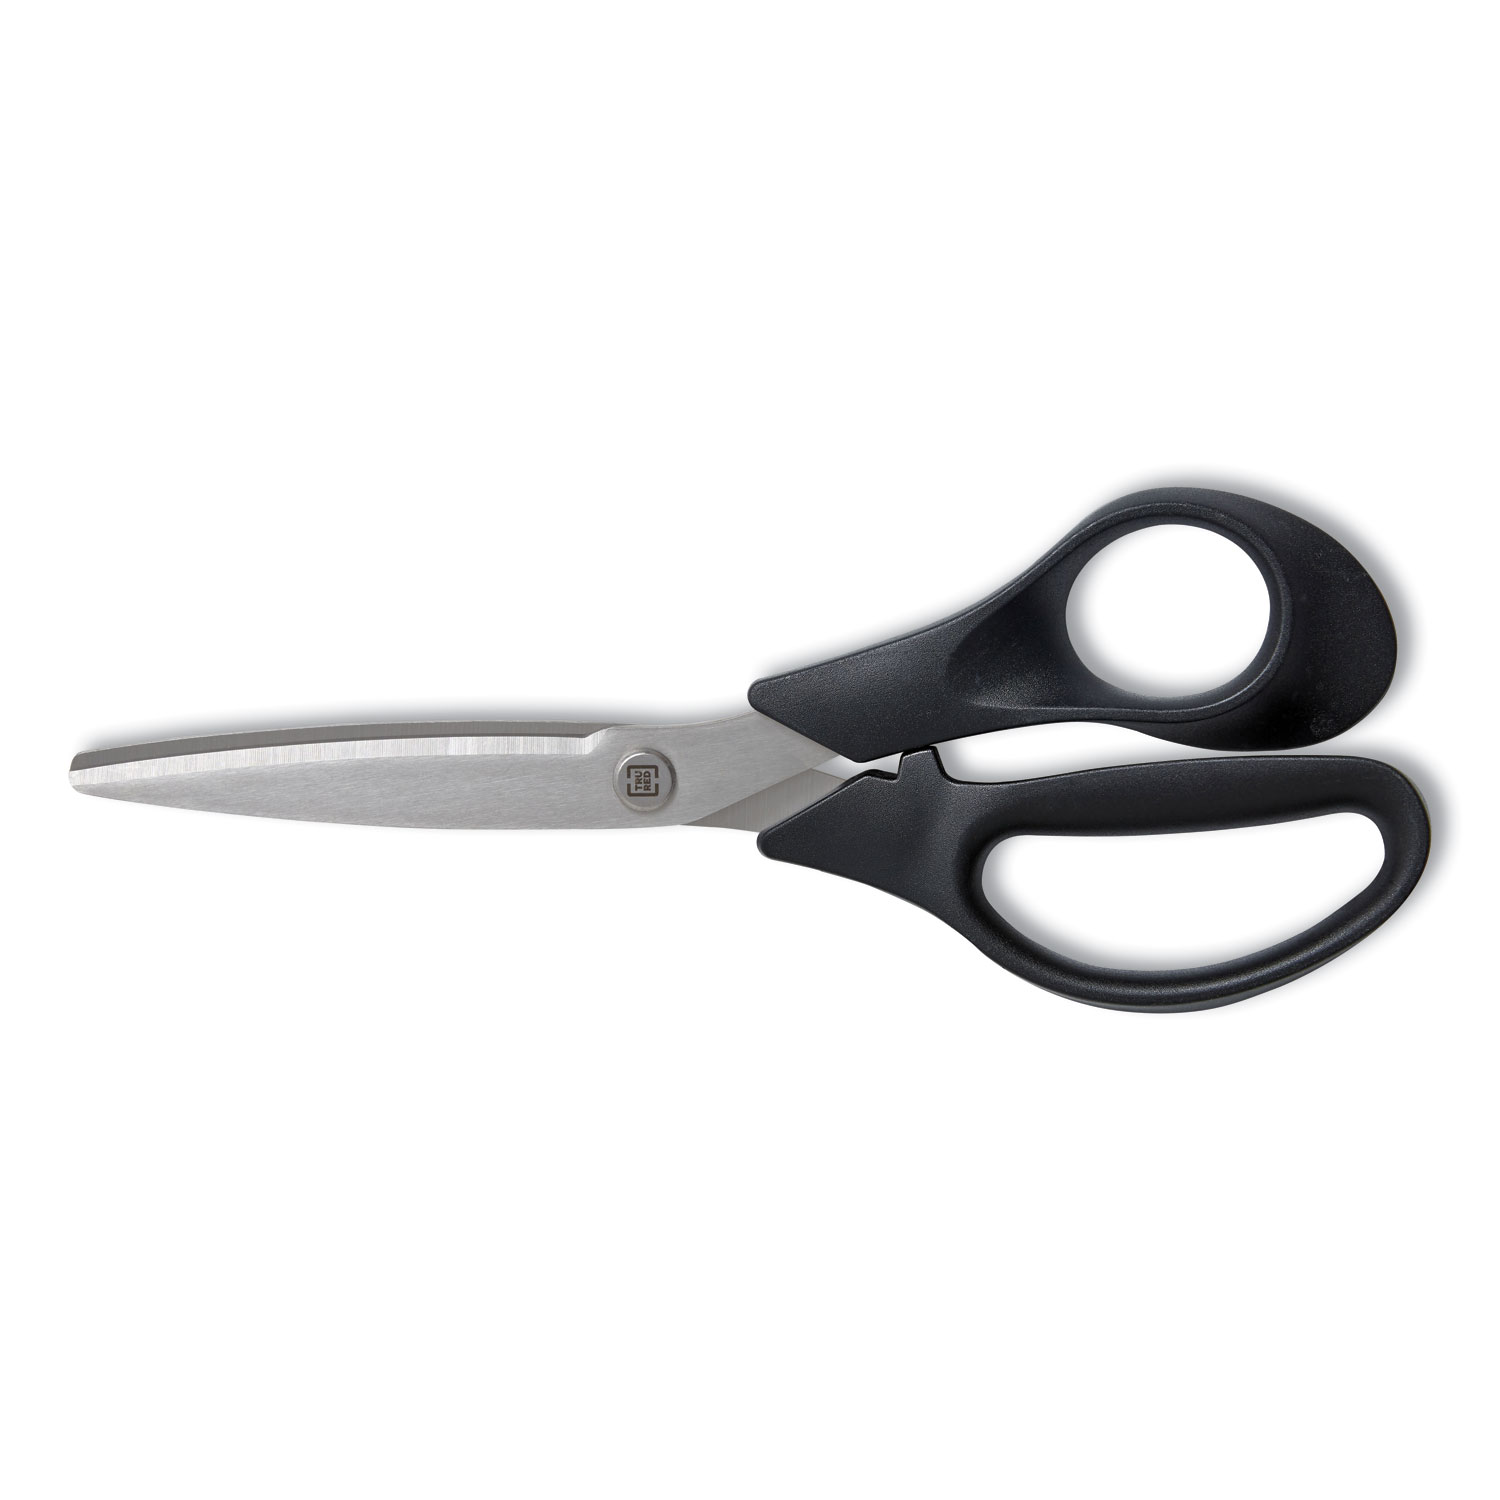 Office Scissors | gold handle